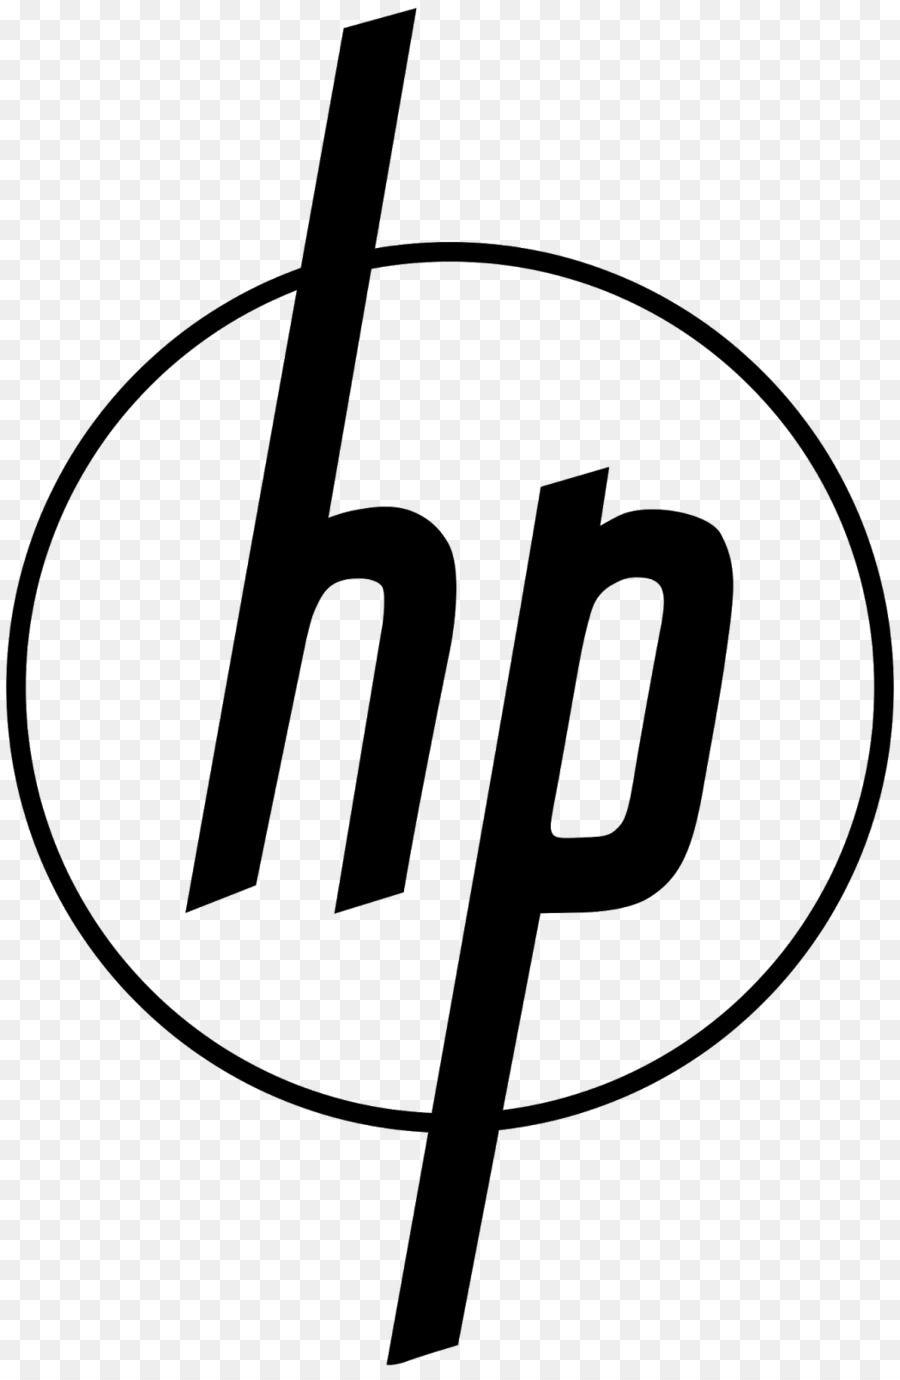 White Dell Logo - Hewlett Packard Dell Logo HP Pavilion Hewlett Packard Enterprise